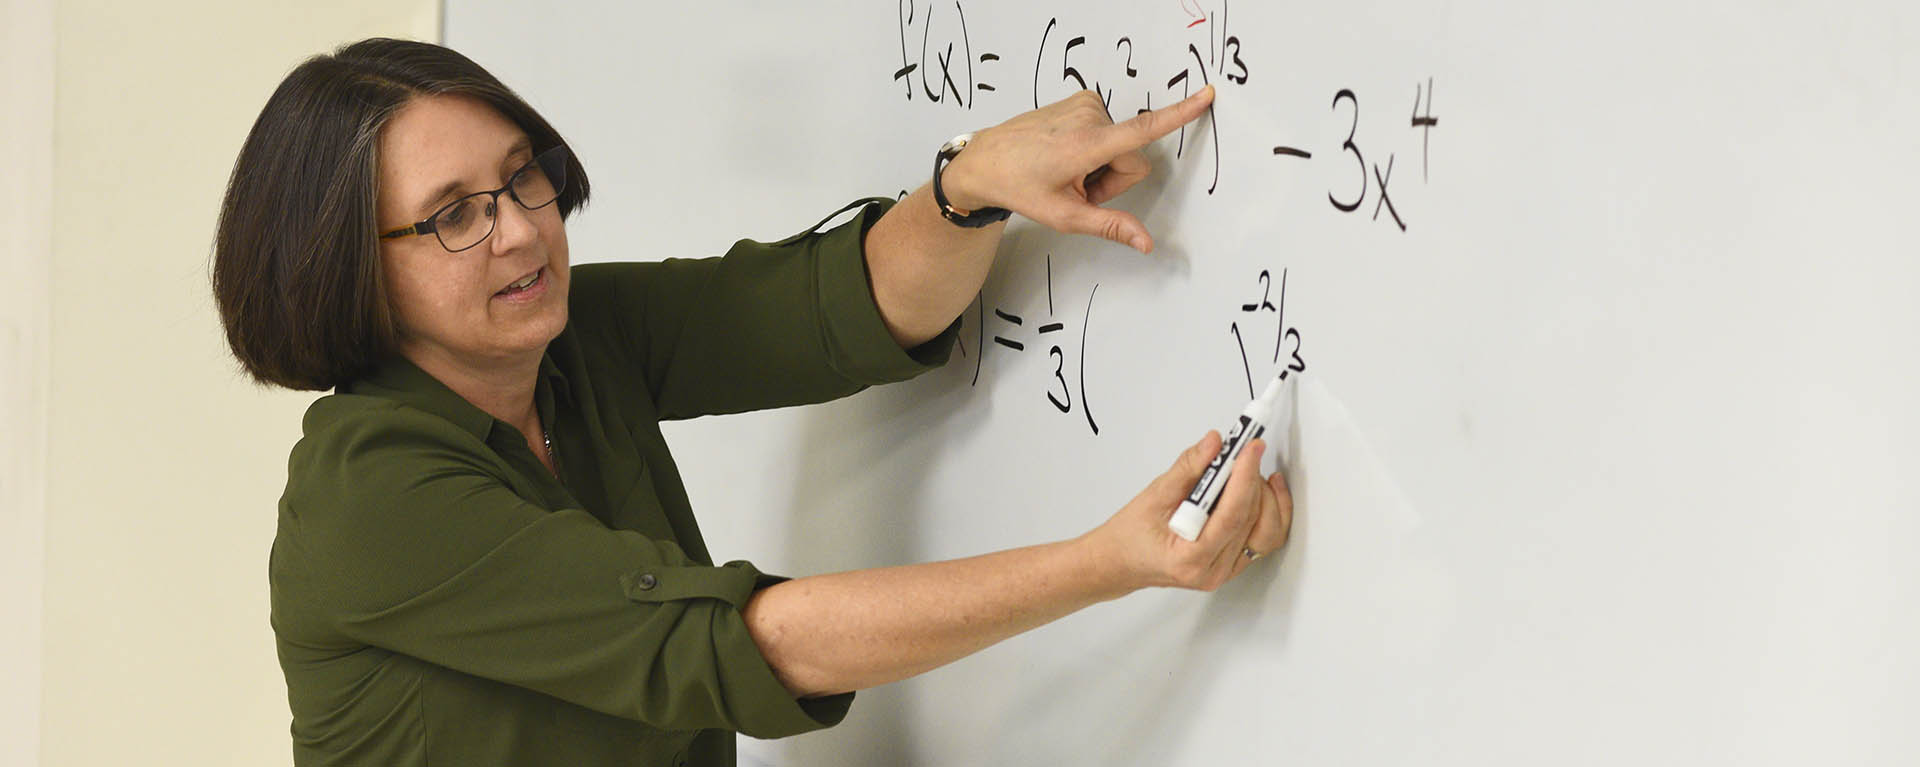 Math professor demonstrating a math problem on the board.